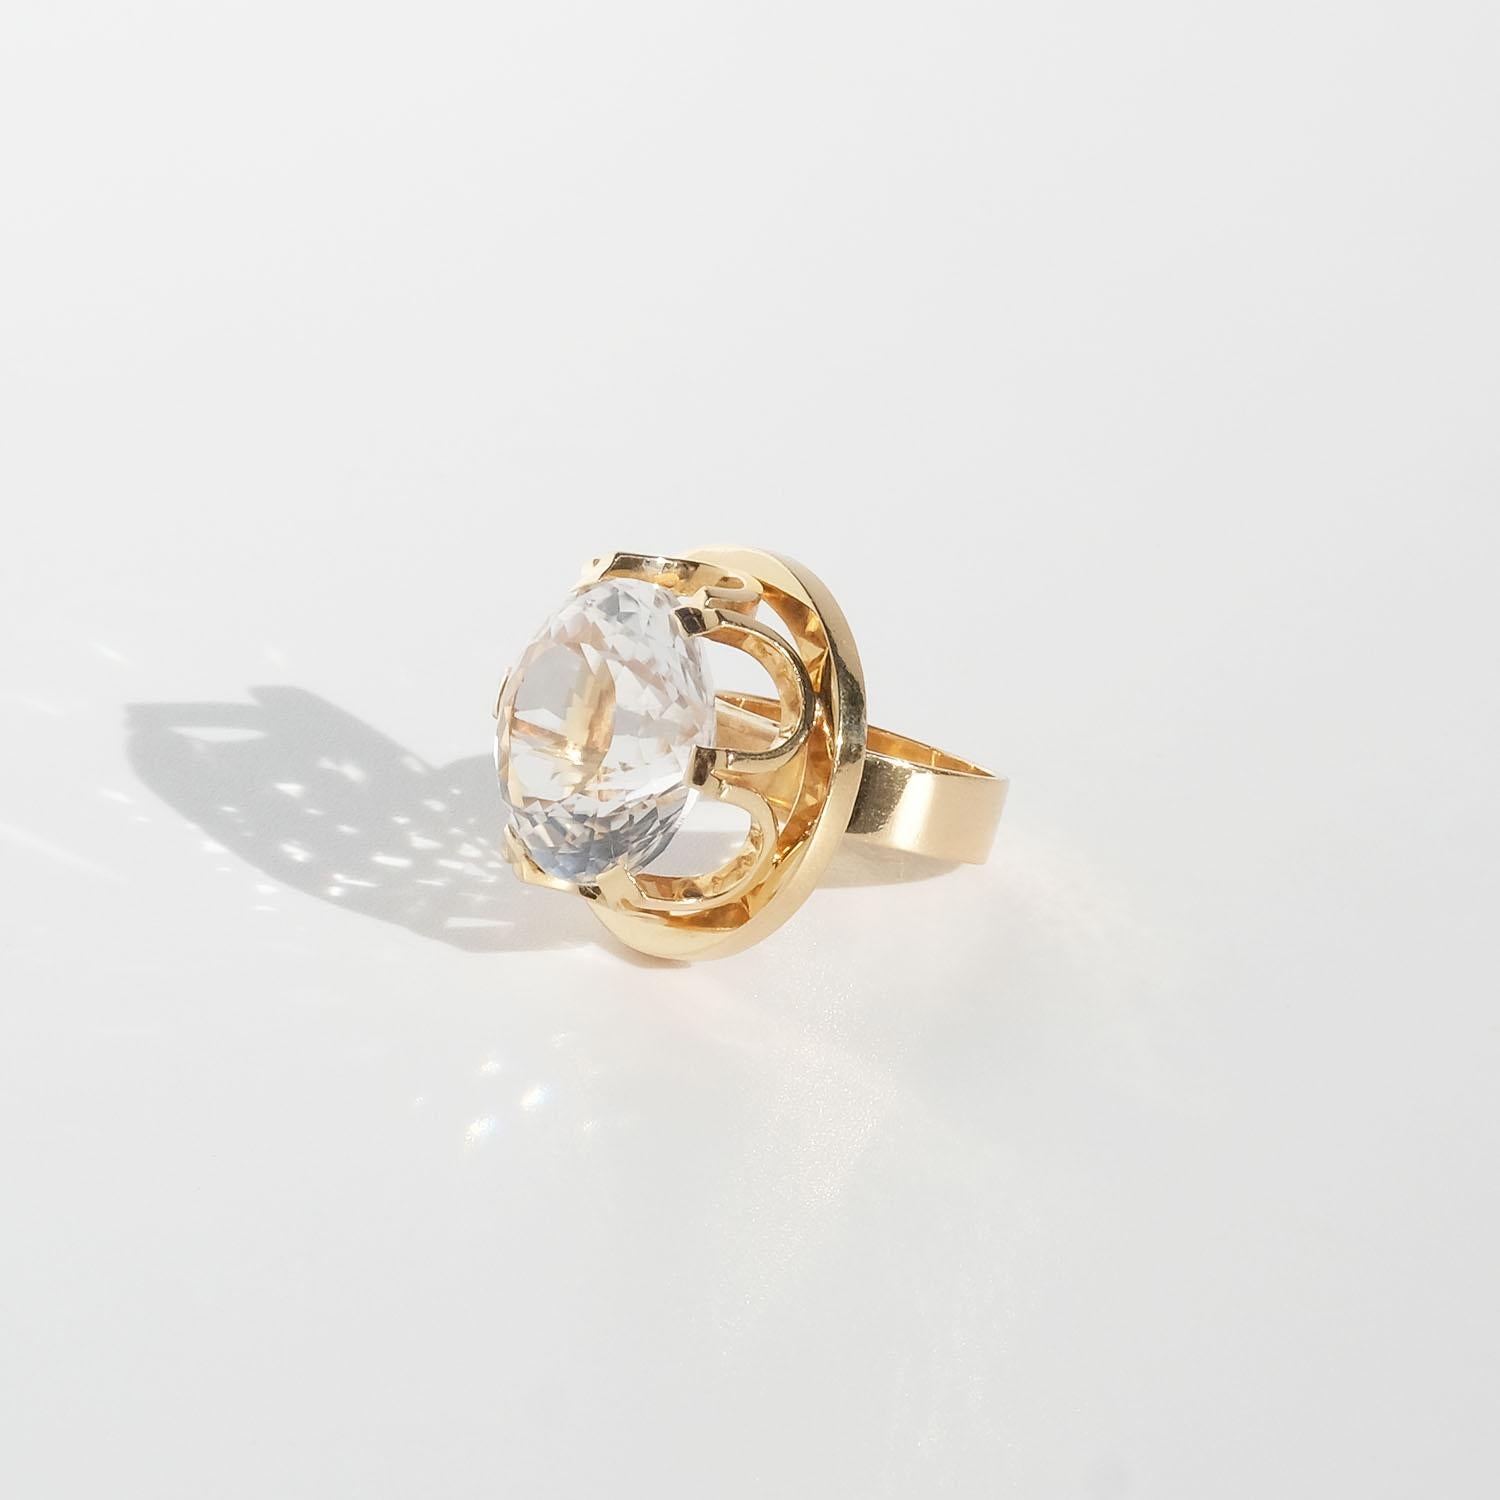 Vintage 18k Gold and Rock Crystal Ring by Finnish Master Kaunis Koru For Sale 4